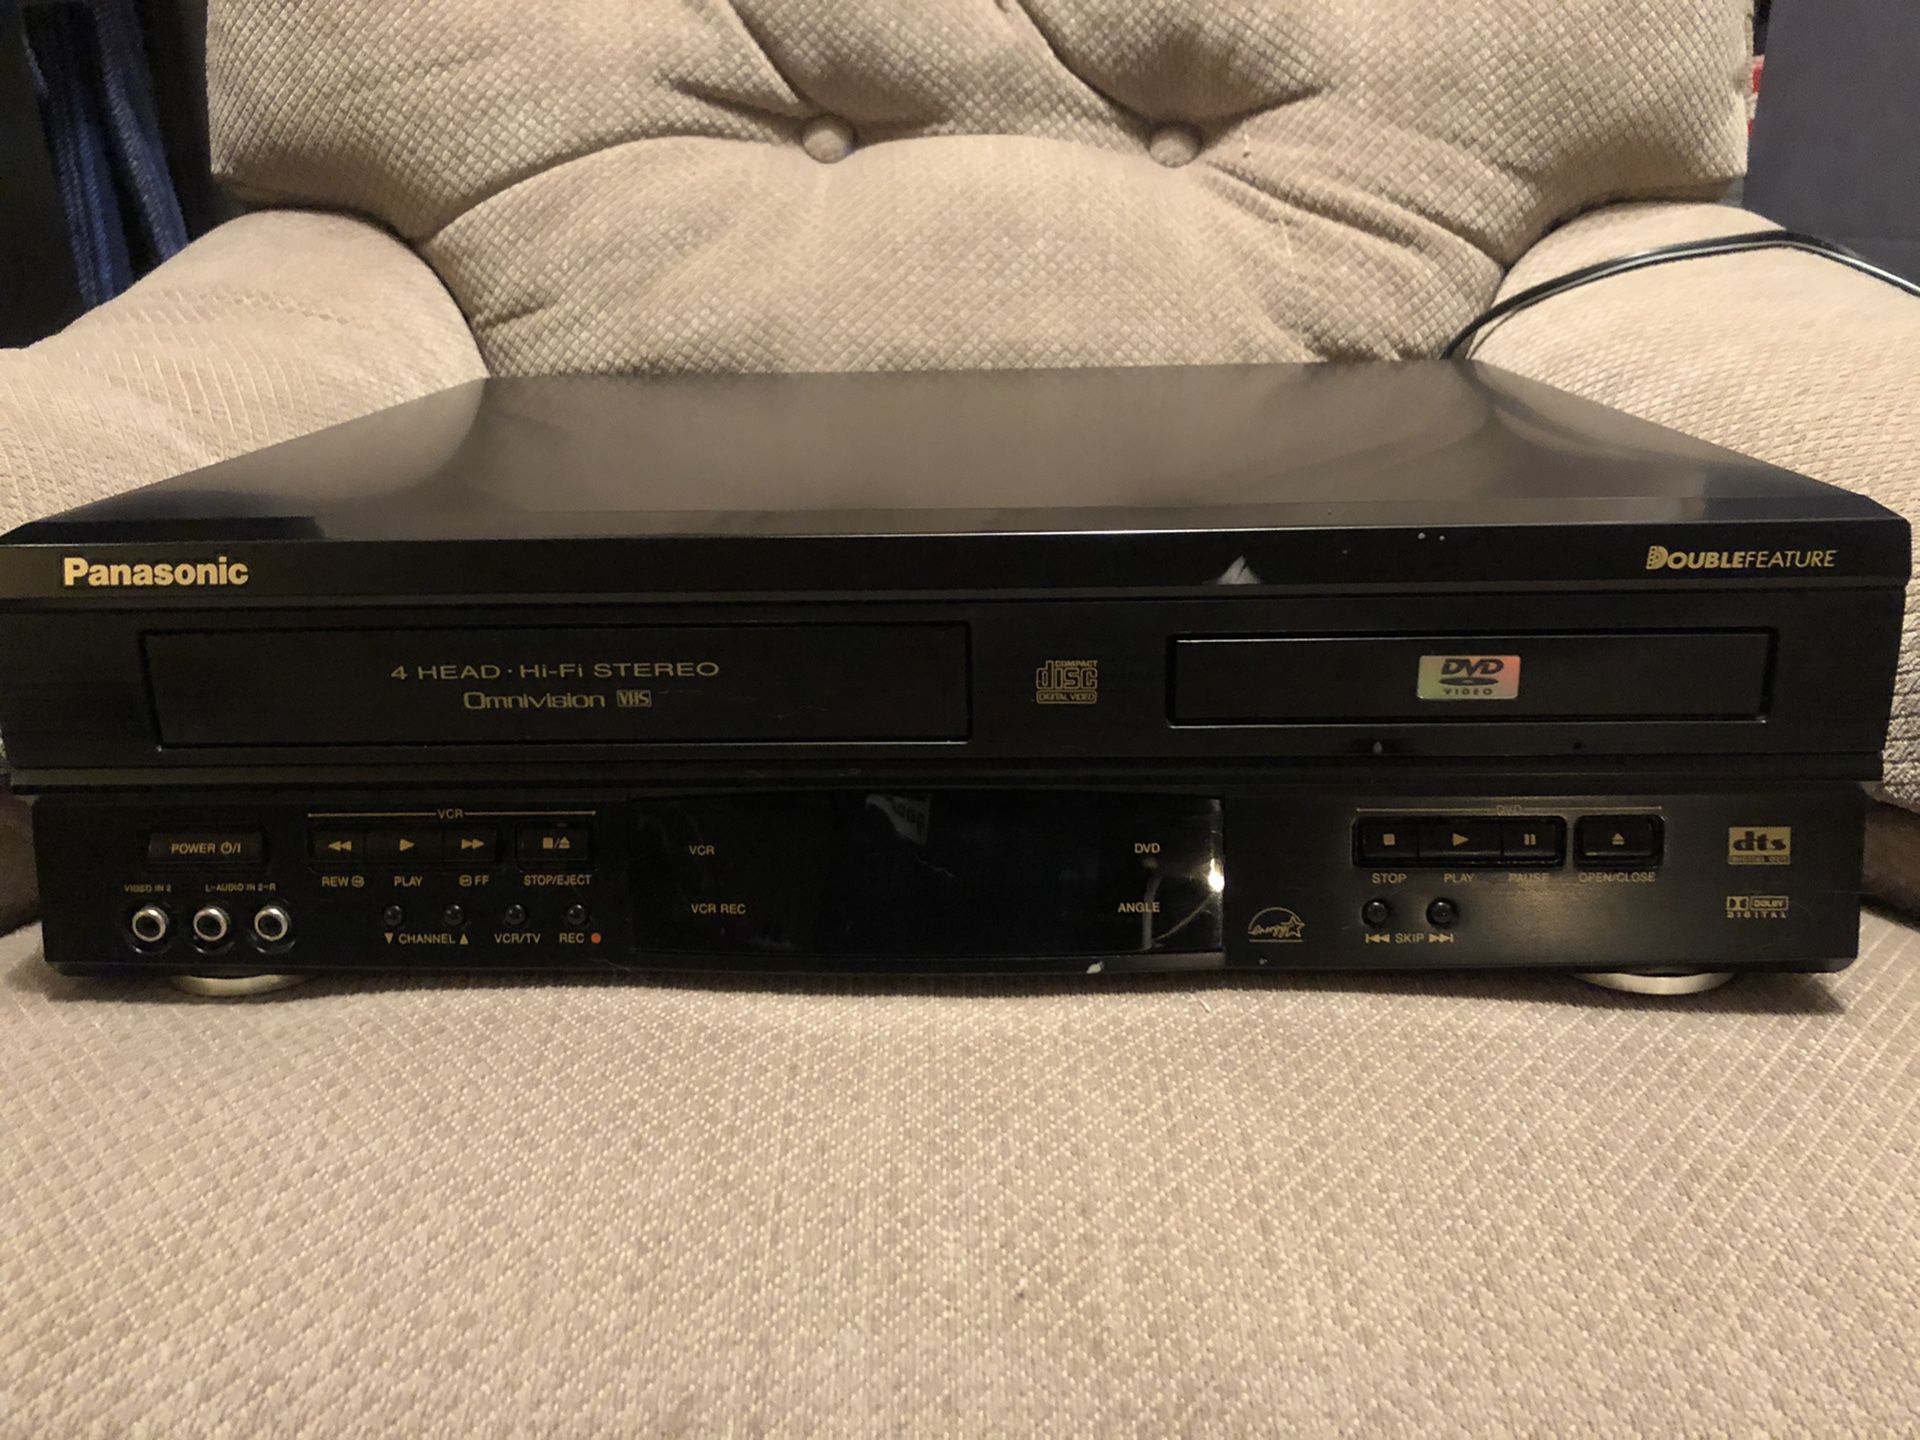 Panasonic VCR/DVD combo